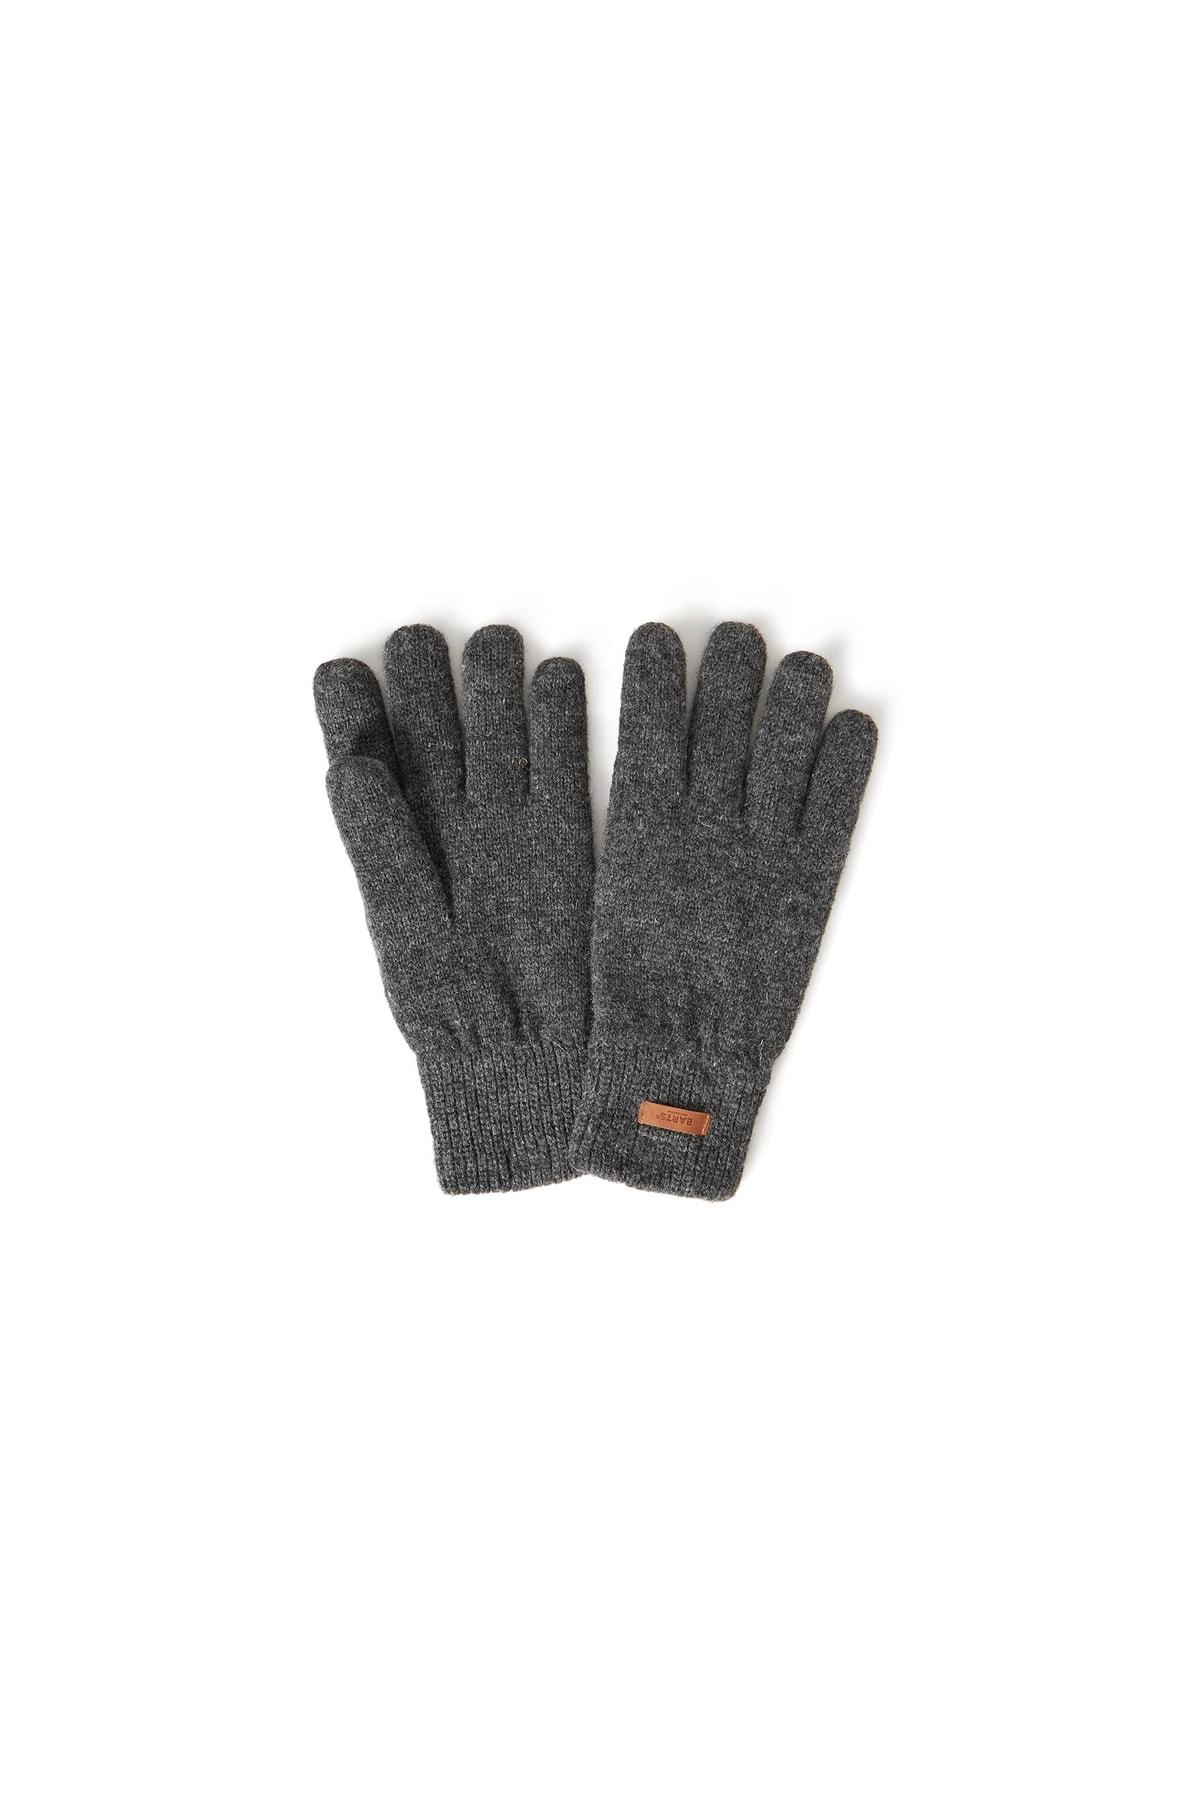 Barts Handschuhe Grau Casual Fast ausverkauft